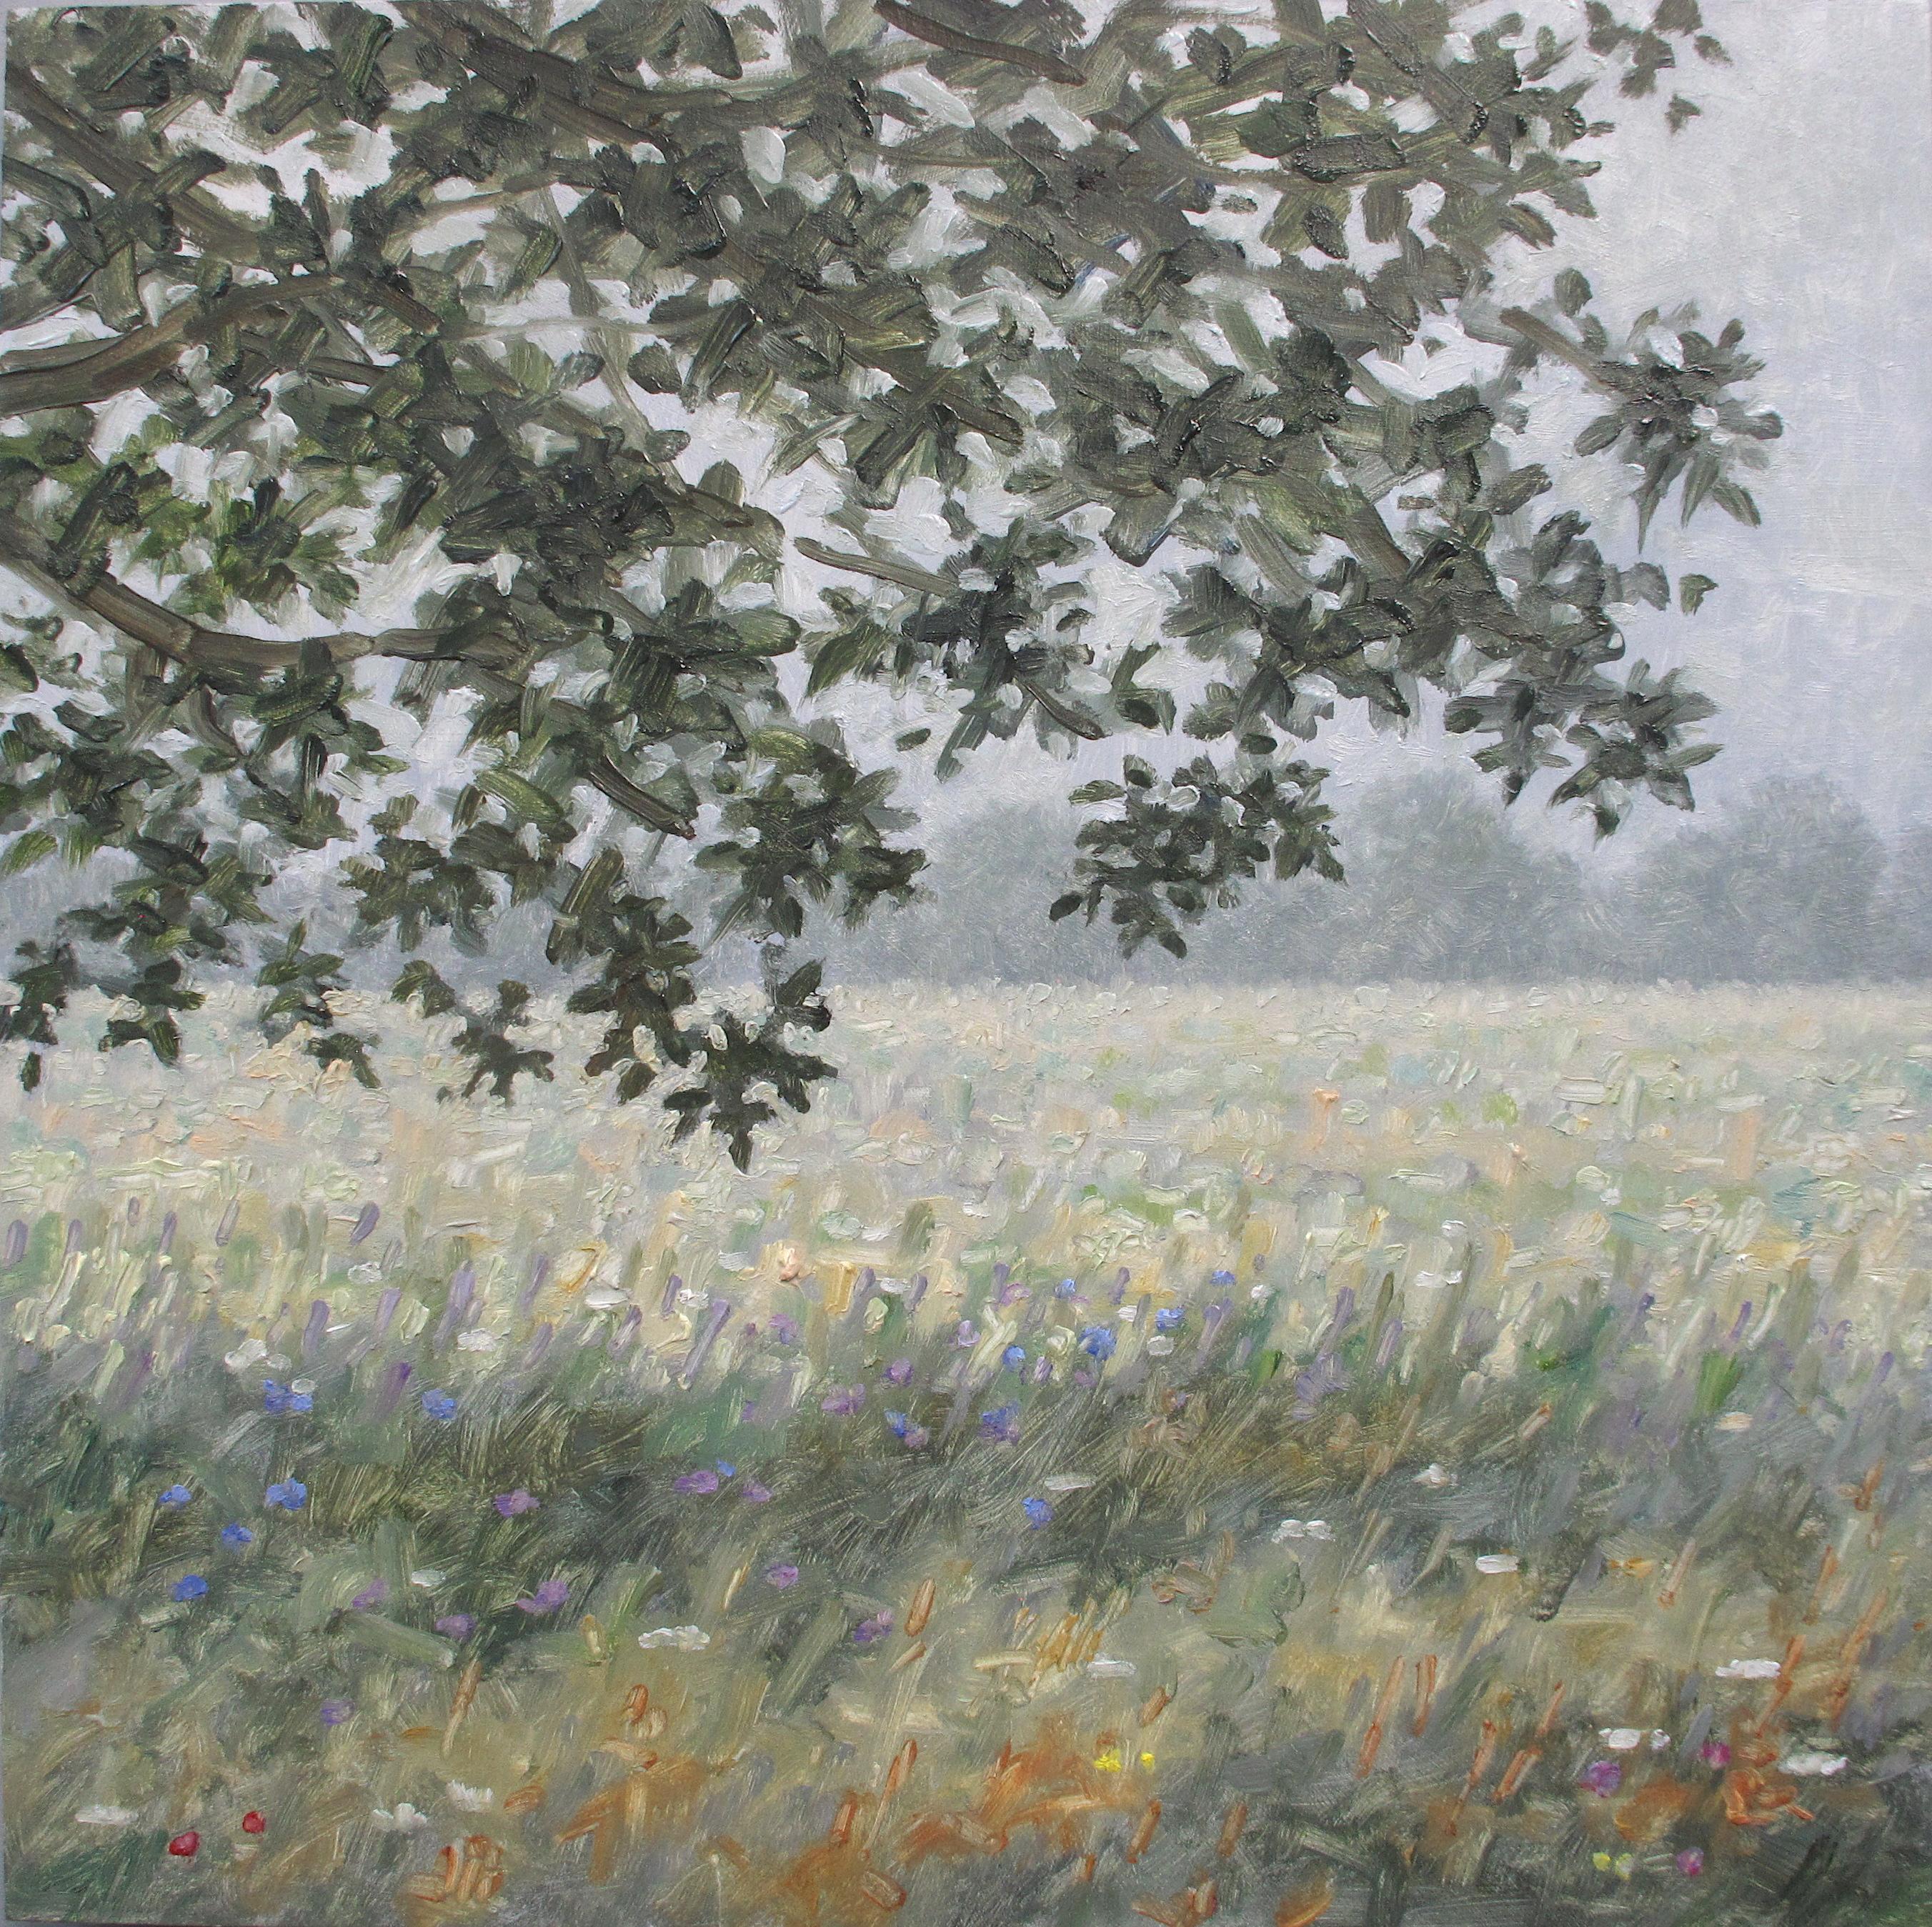 Thomas Sarrantonio Landscape Painting - Field Painting August 17 2020, Landscape, Flowers in Green Field, Trees, Flowers